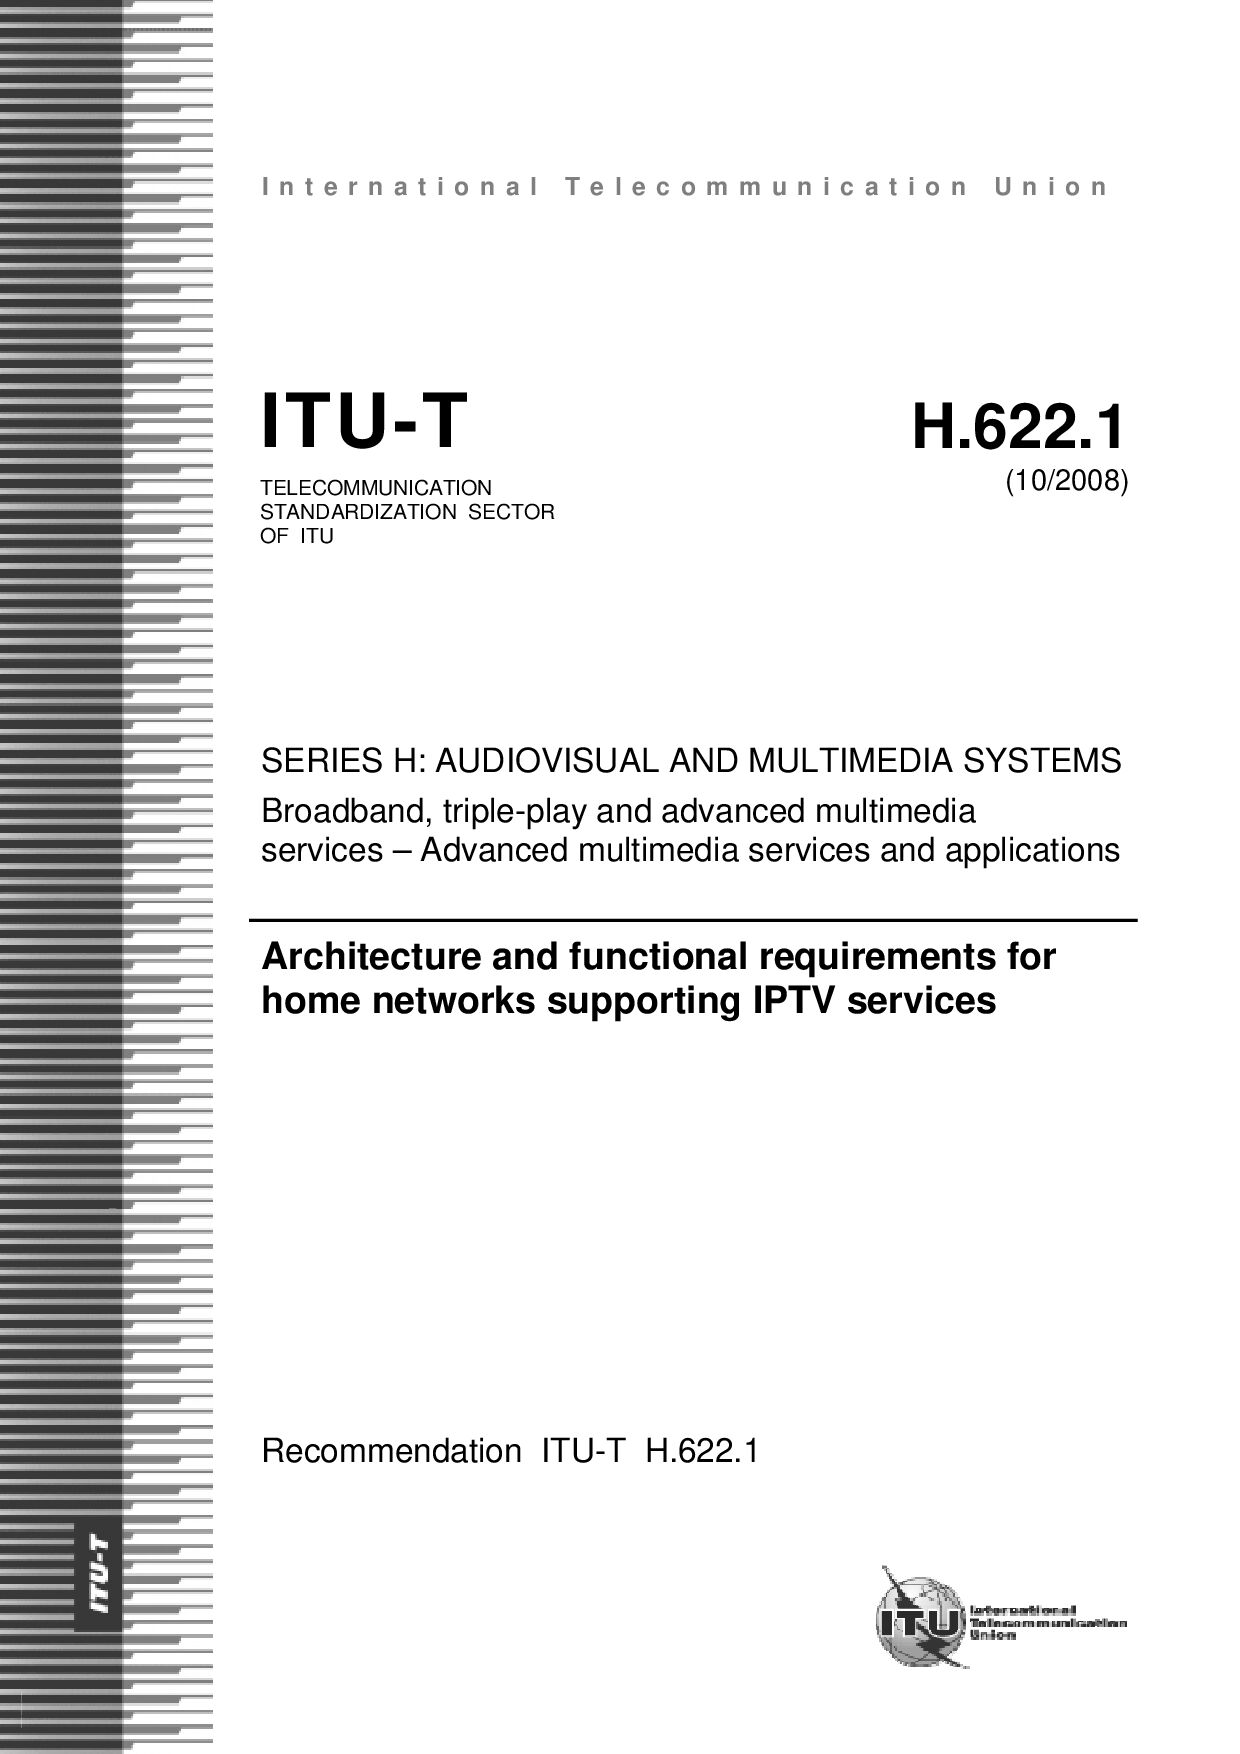 ITU-T H.622.1-2008